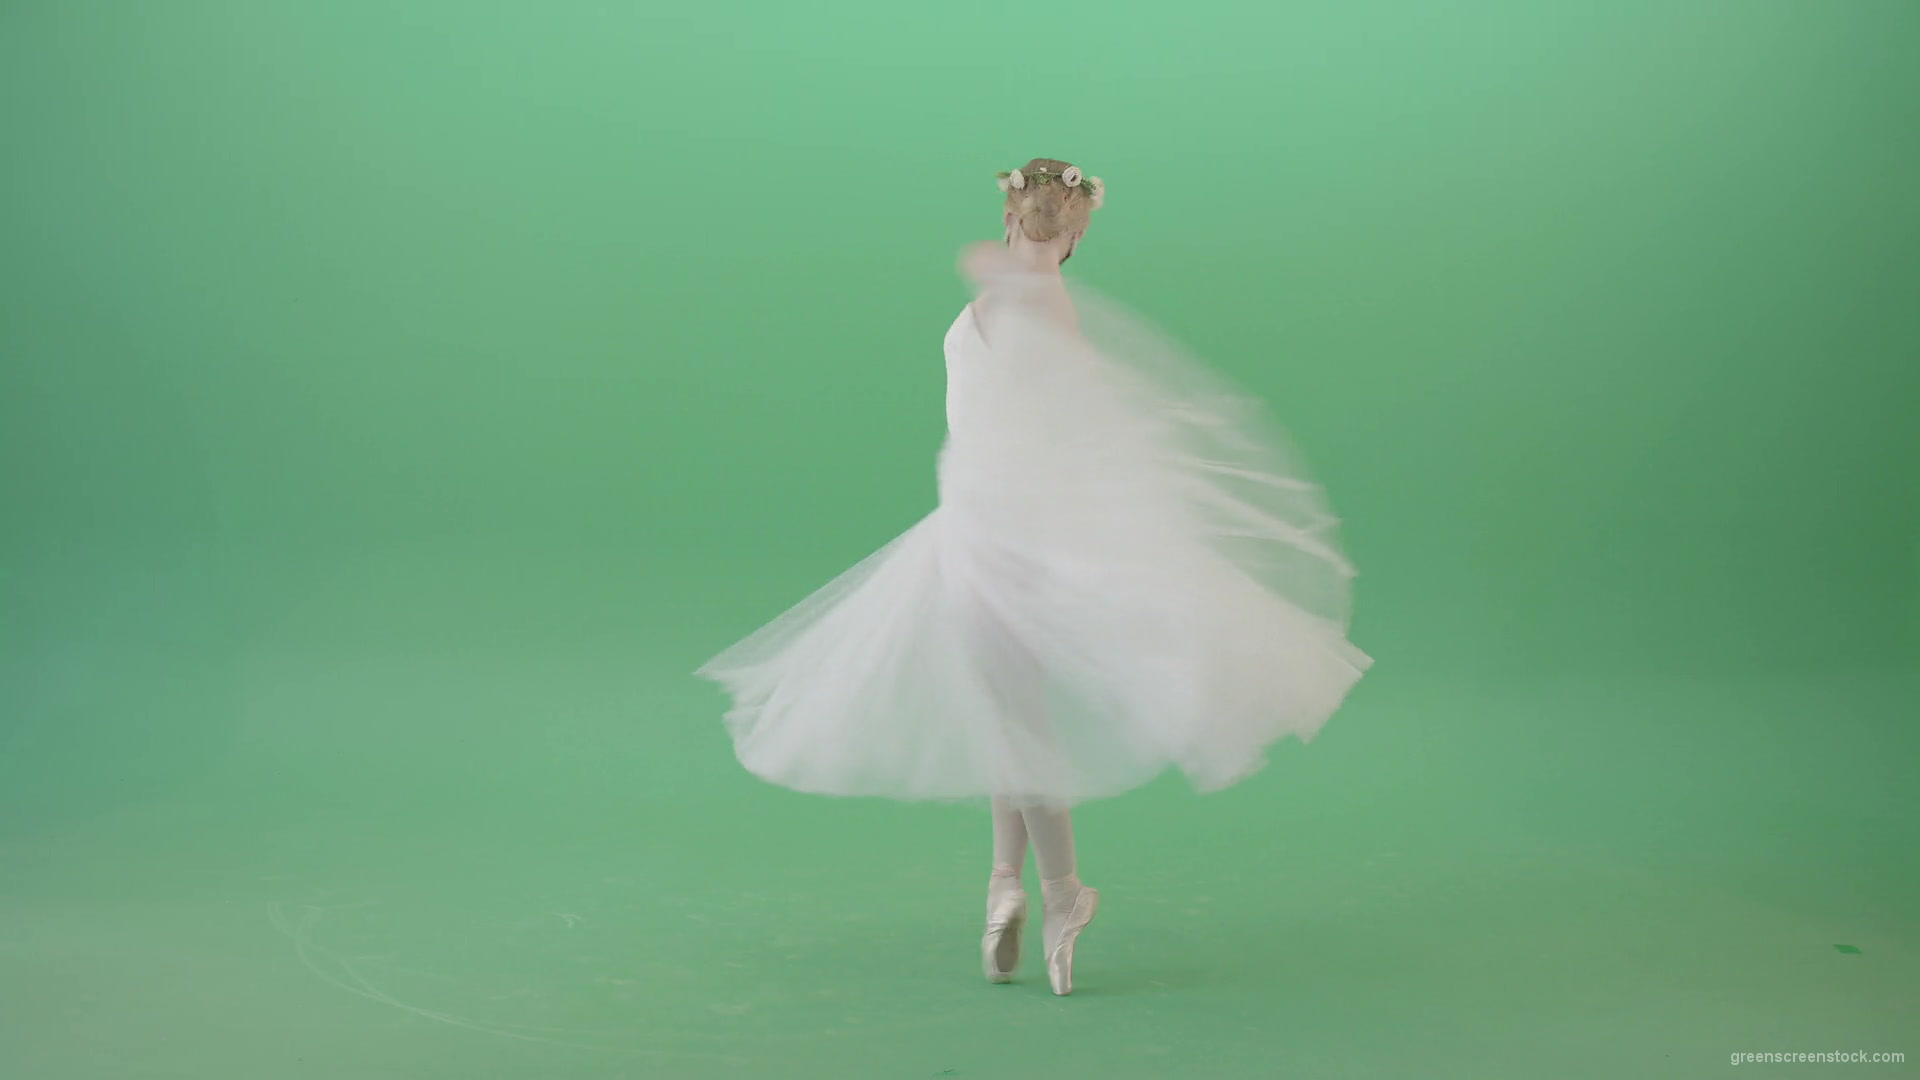 Ballet-Dancing-Girl-in-Corona-Virus-Mask-spinning-on-green-screen-4K-Video-Footage-1920_006 Green Screen Stock